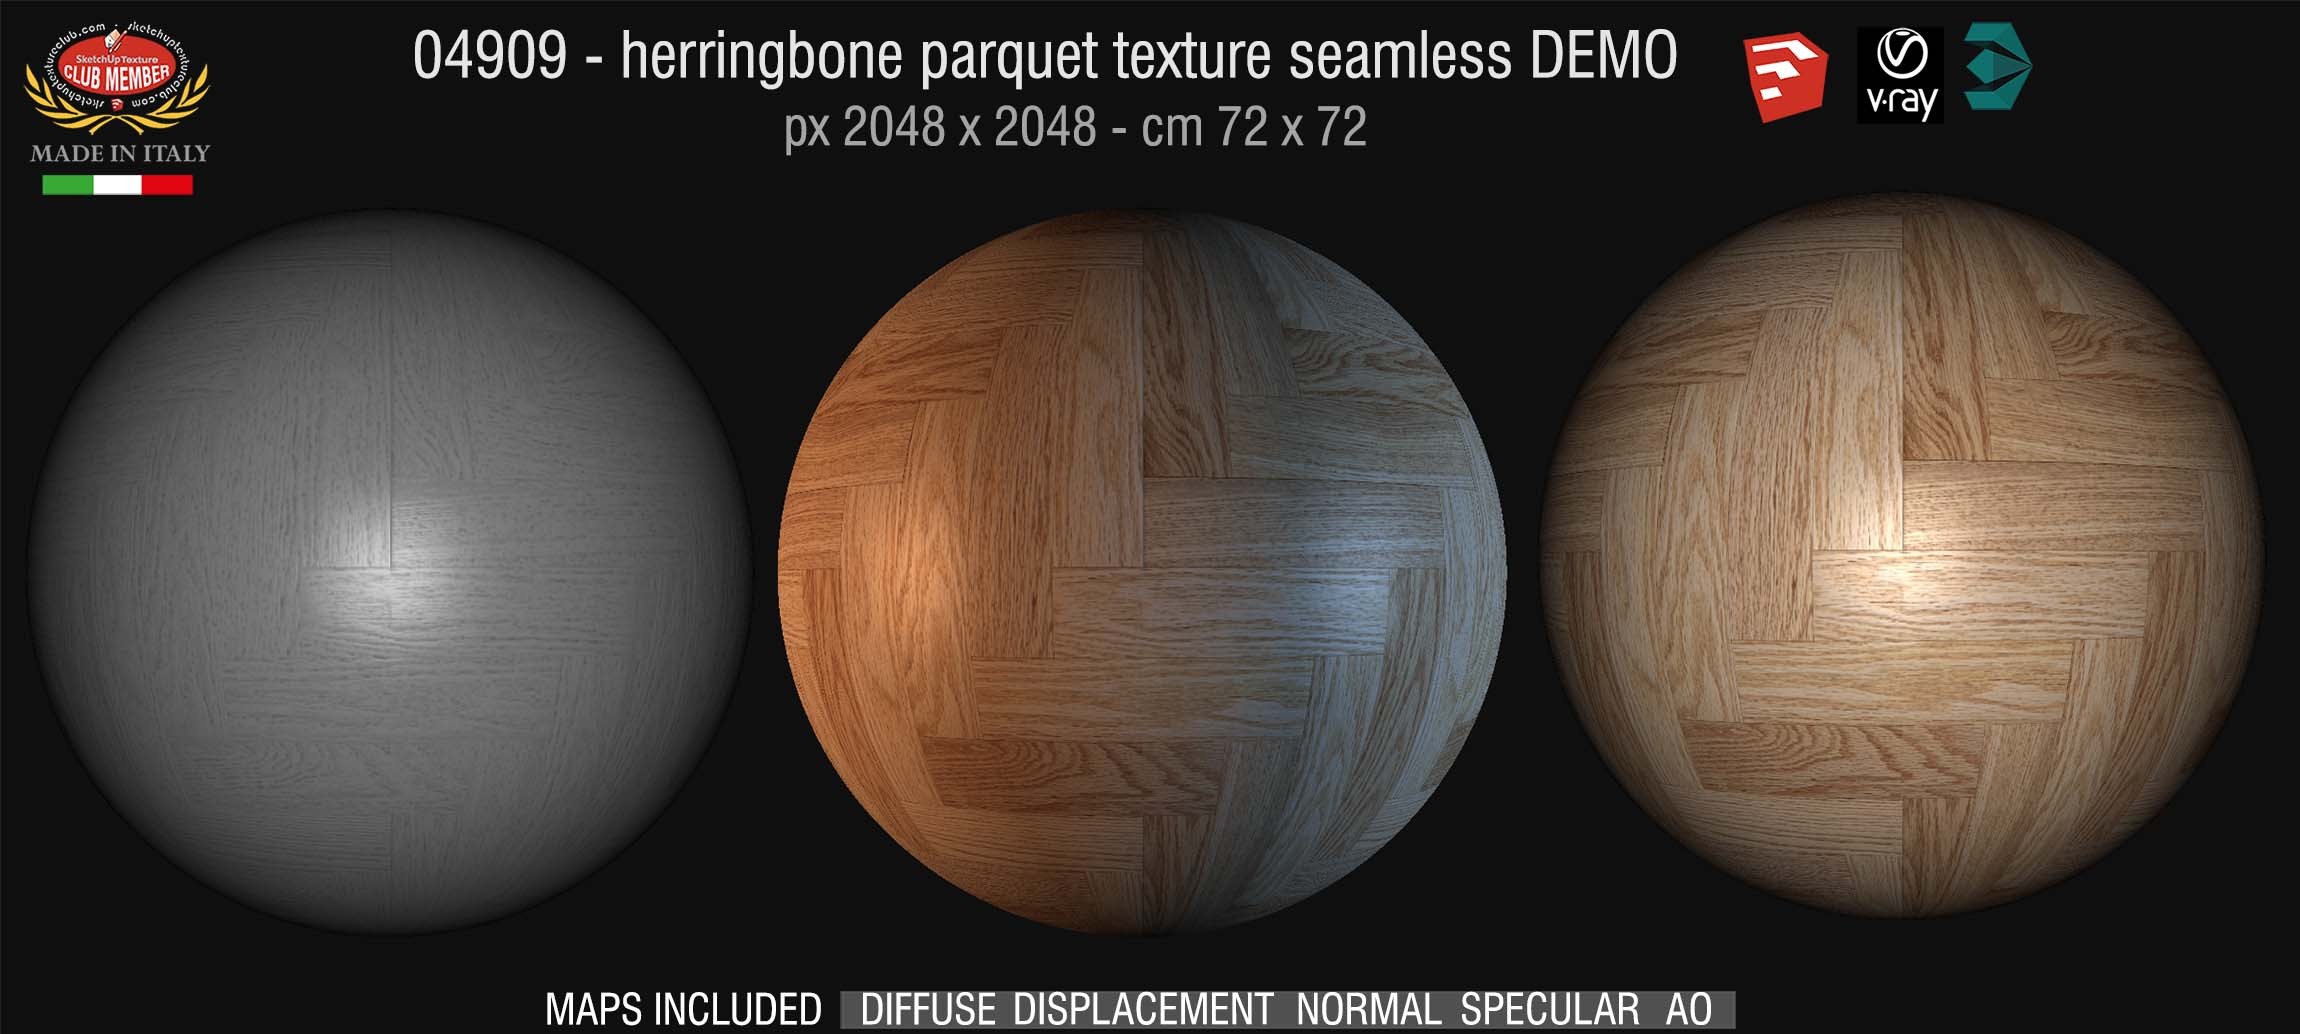 04909 HR Herringbone parquet texture seamless + maps DEMO